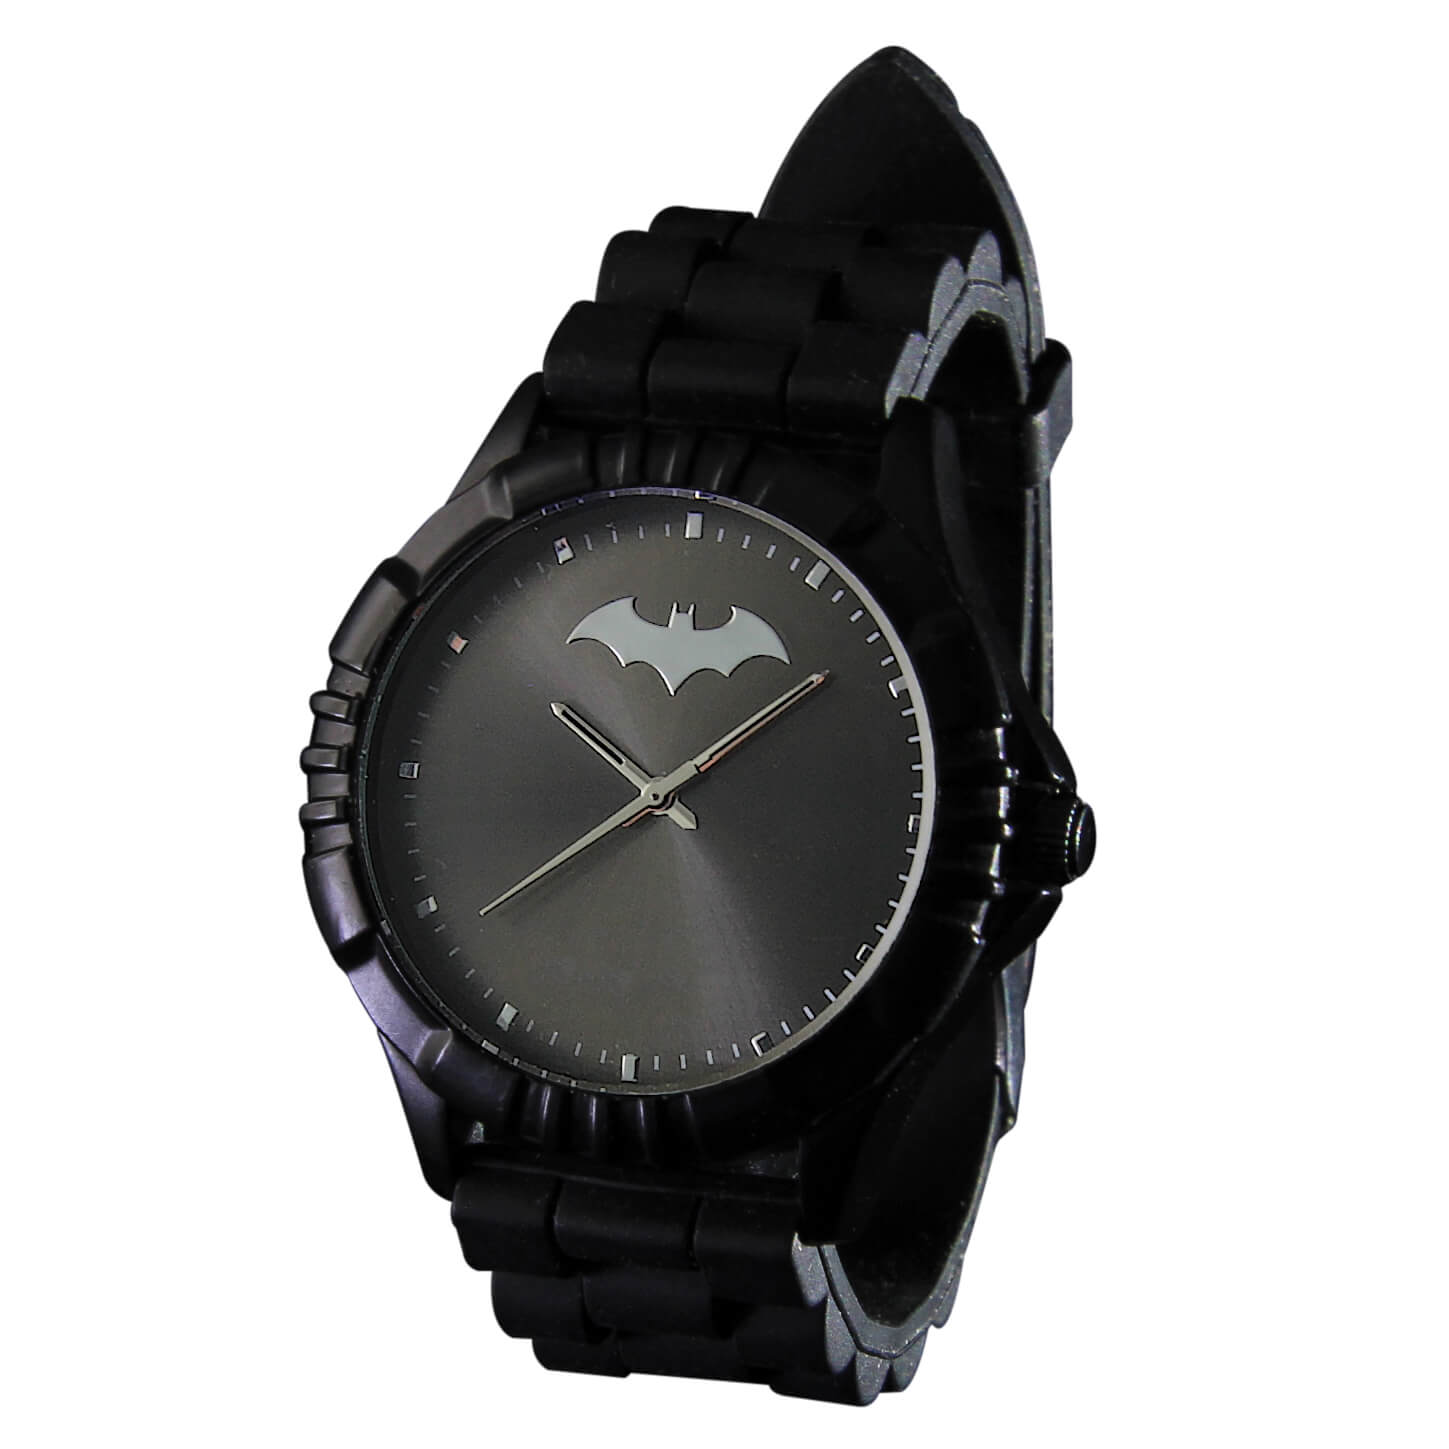 Часы batman. Часы Police Batman. Наручные часы ANDYWATCH Бэтмен. Часы с Бэтменом мужские. Часы Бэтмен DC наручные мужские.